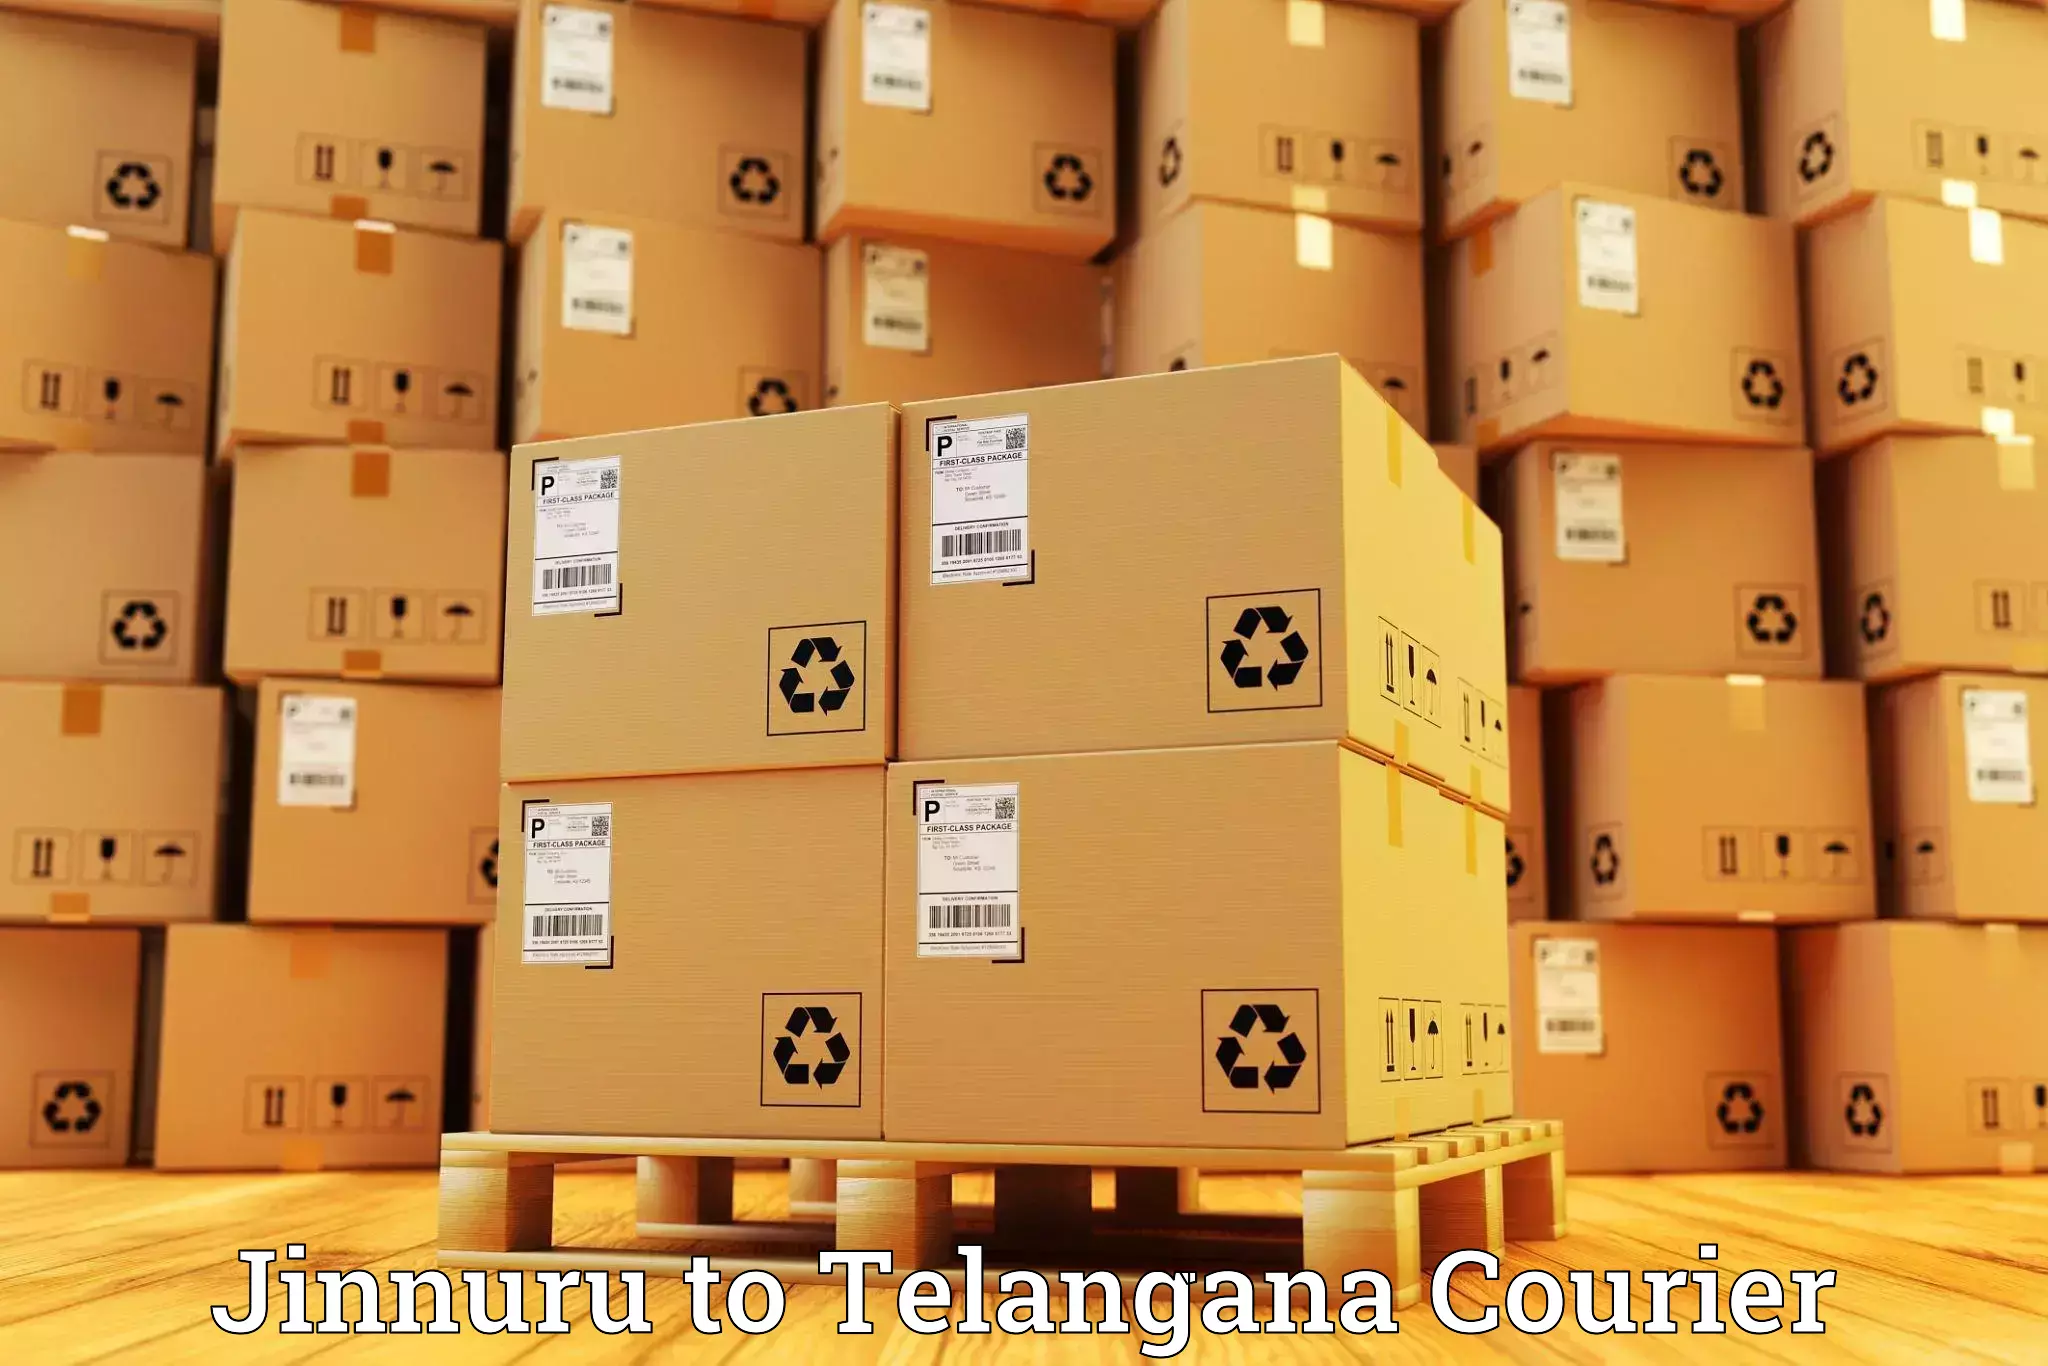 Professional courier services in Jinnuru to Aswaraopeta